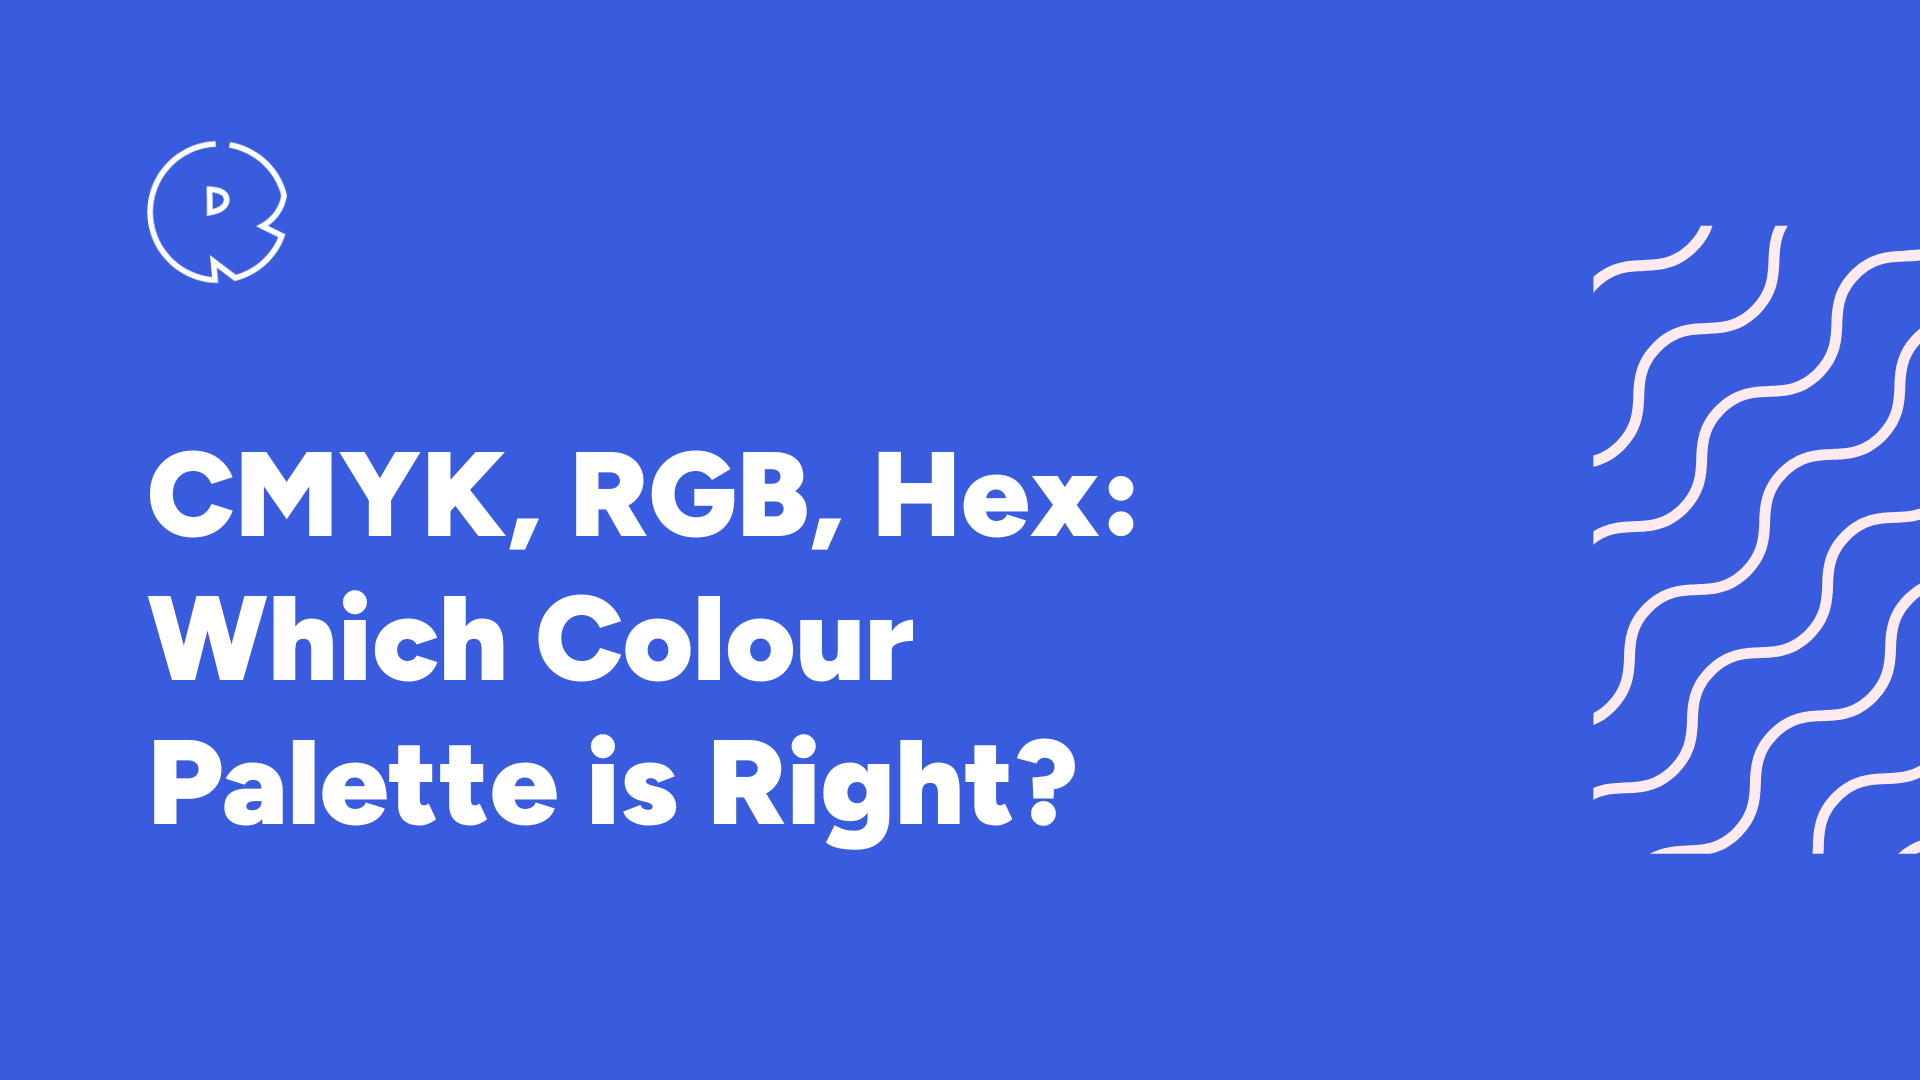 CMYK, RGB or Hex?